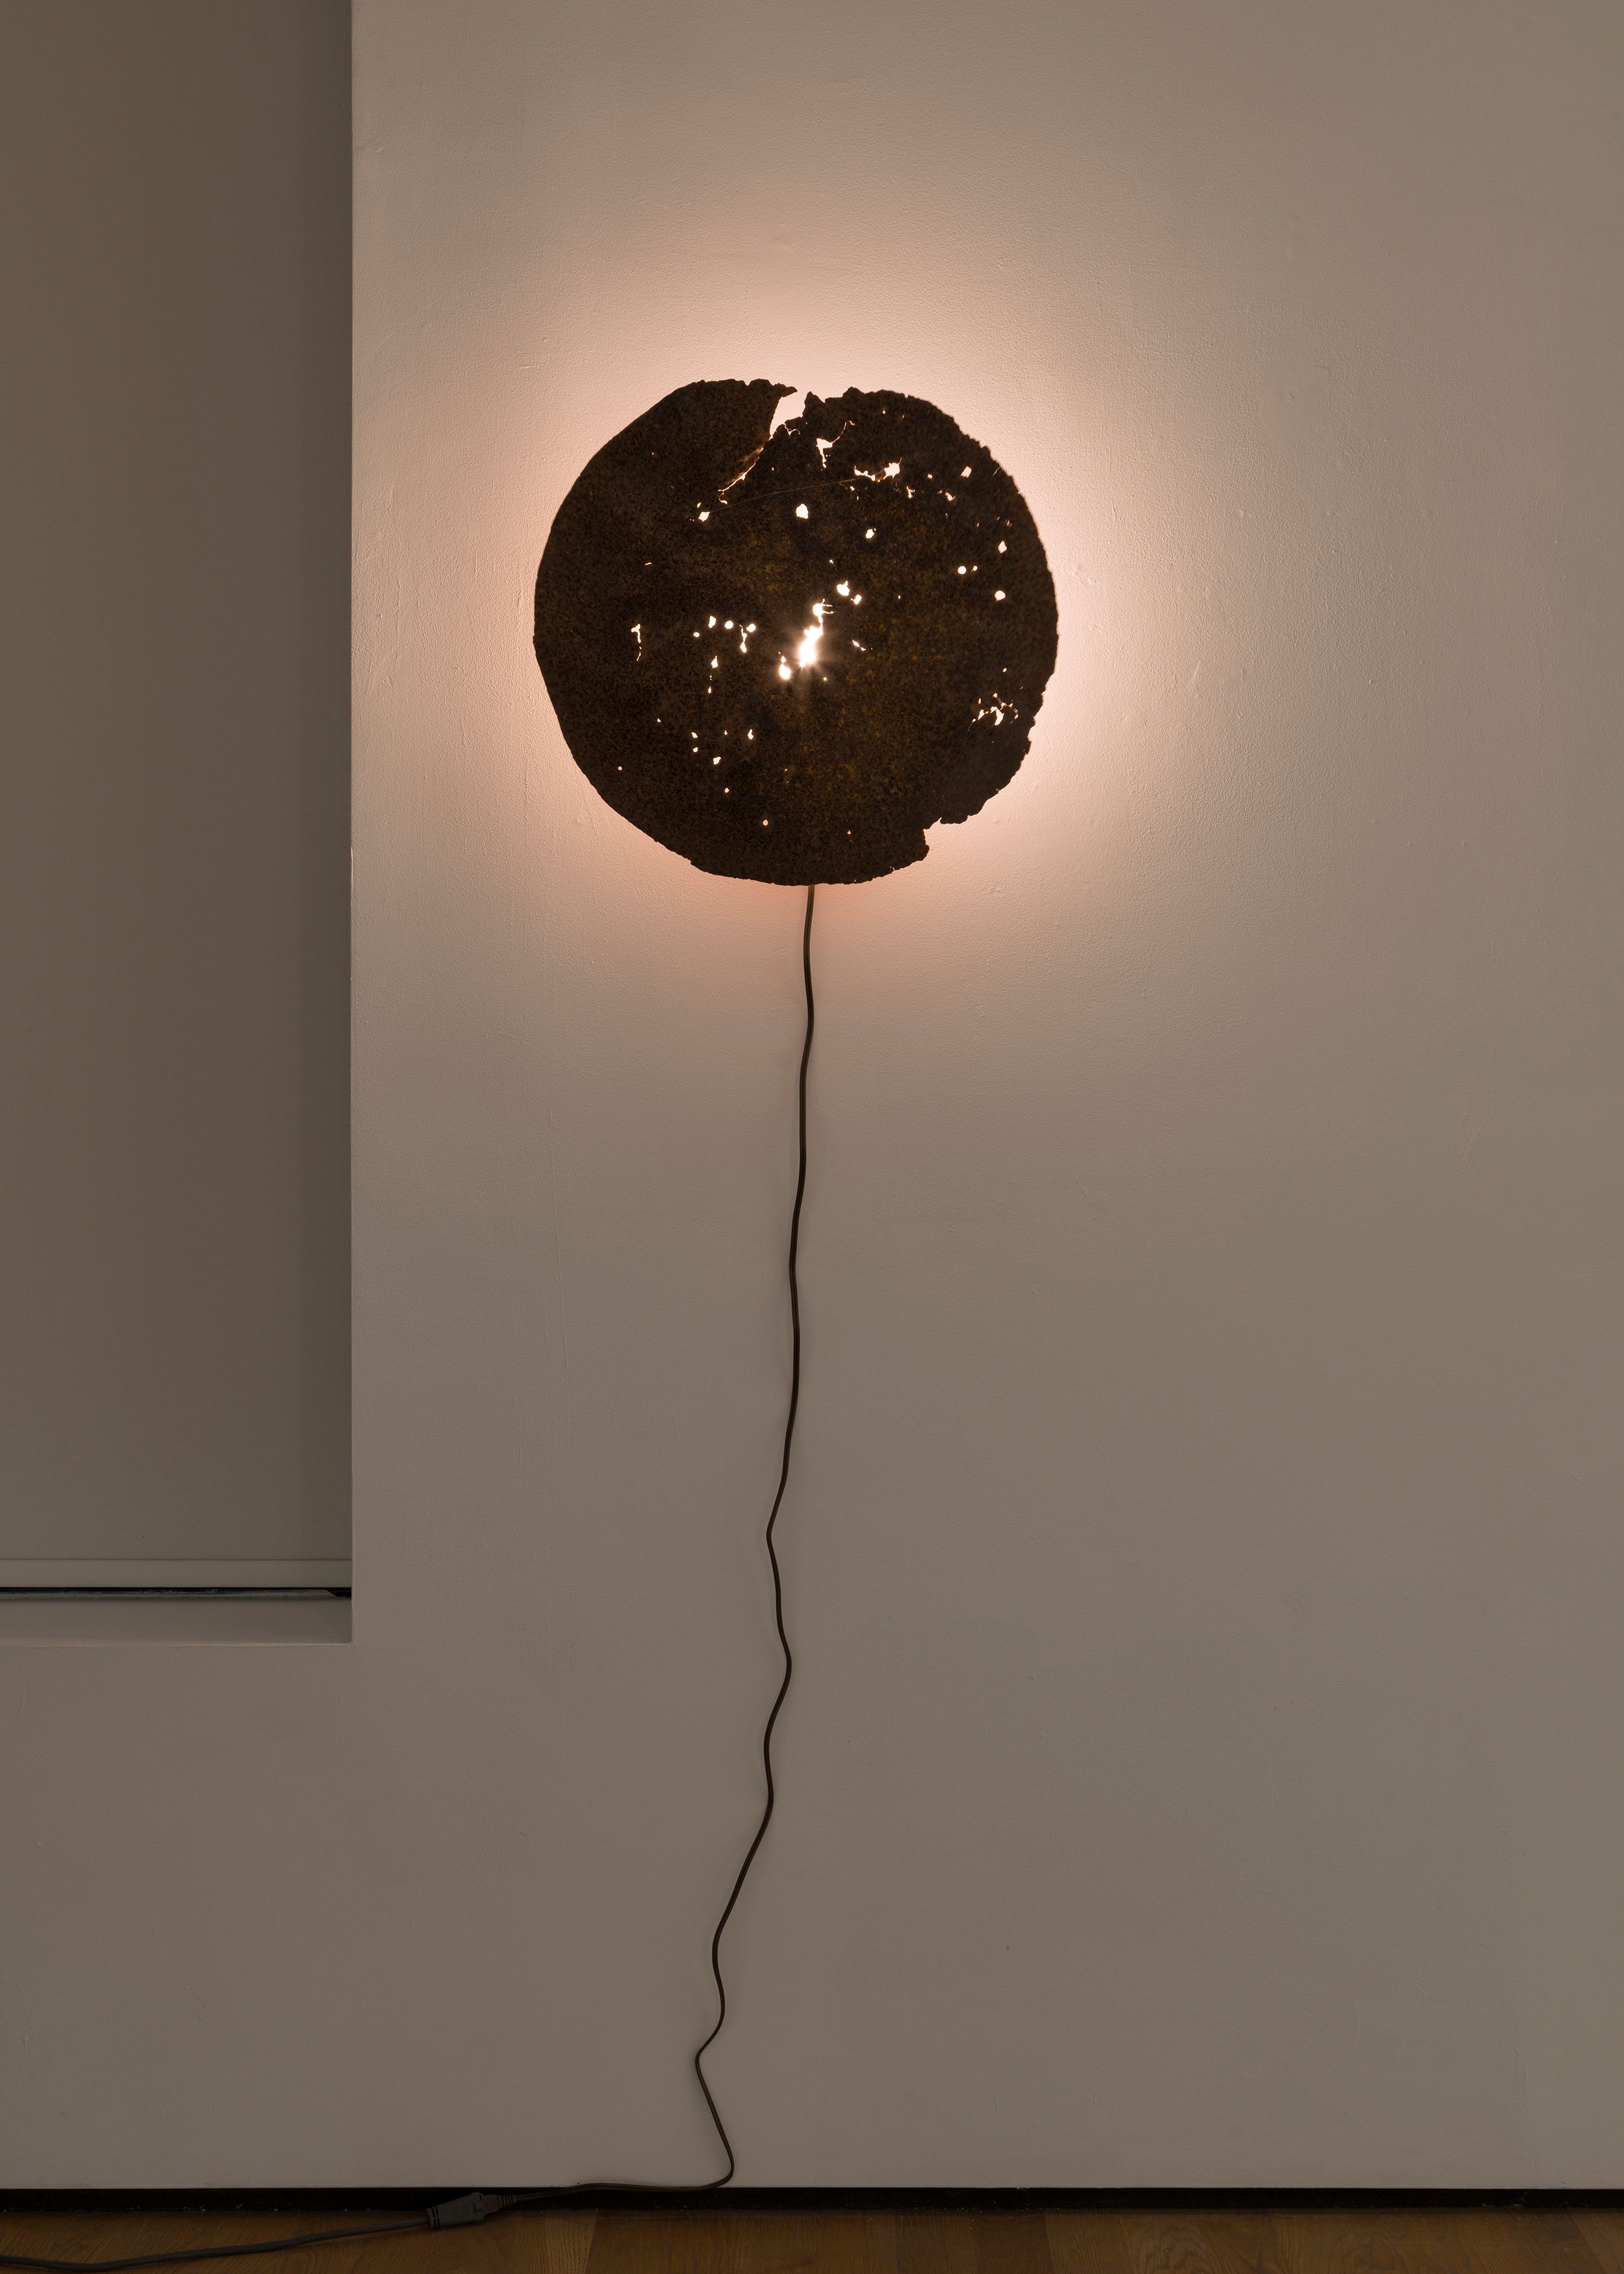 Rafal Bujnowski, Sun / Lamp, 2022, metal, paint, light, 56 cm diameter x 1 cm (22 in. diameter x 3/8 in.)